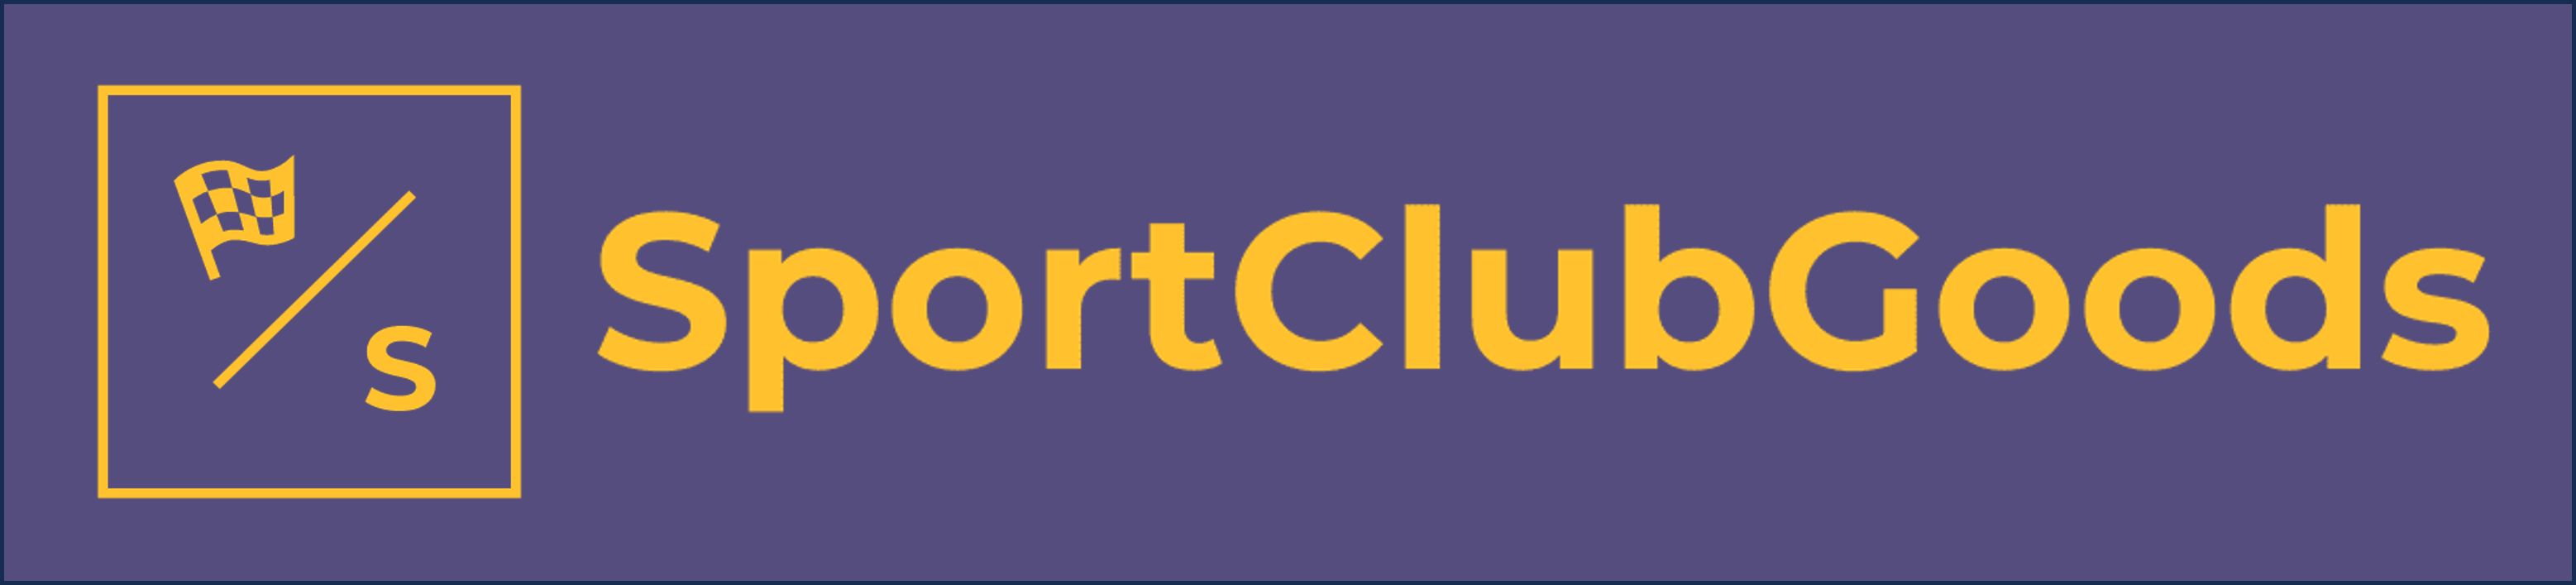 Sport Club Goods